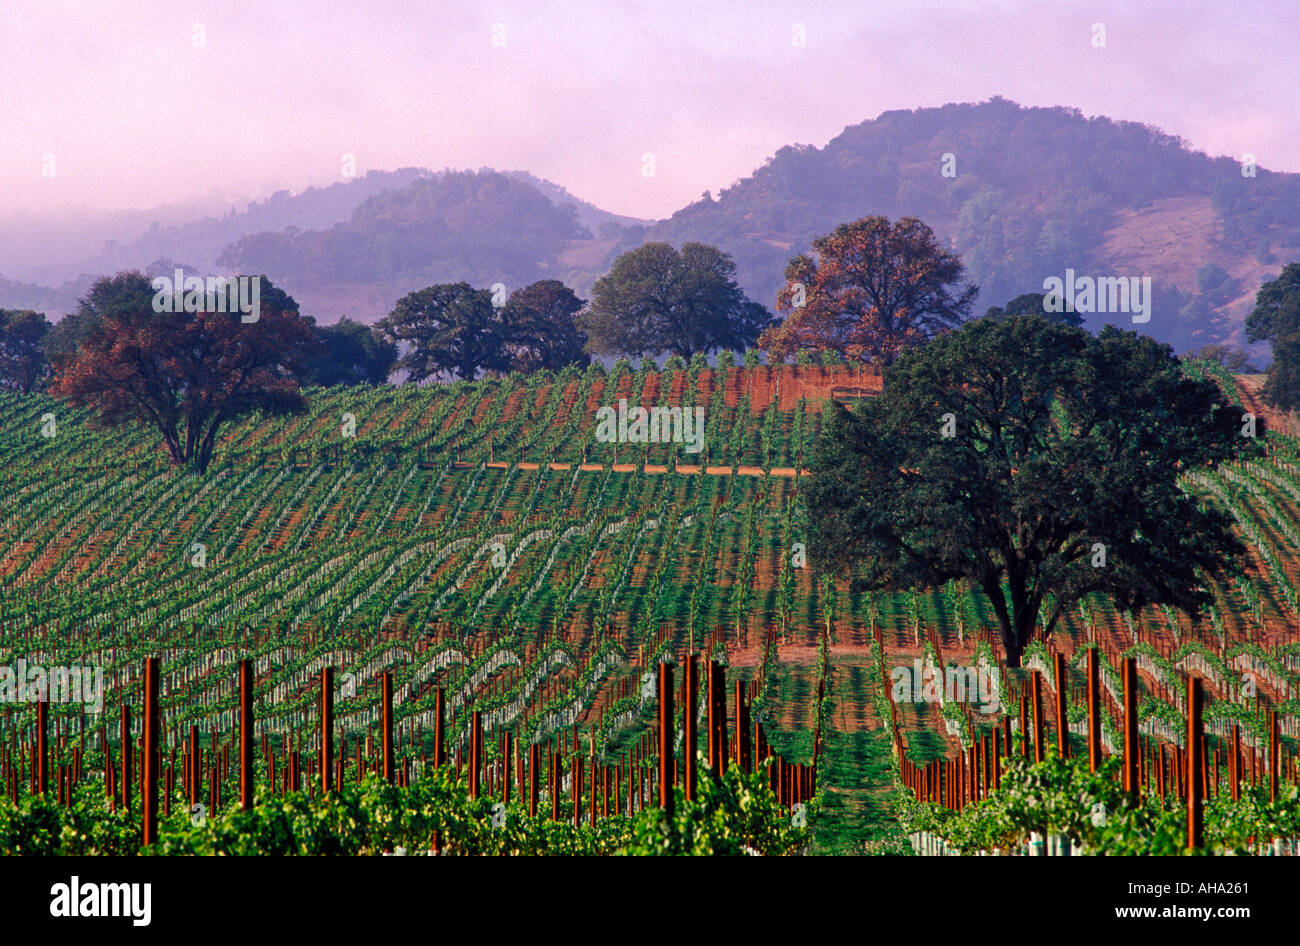 USA California Napa Valley view of vineyards Stock Photo